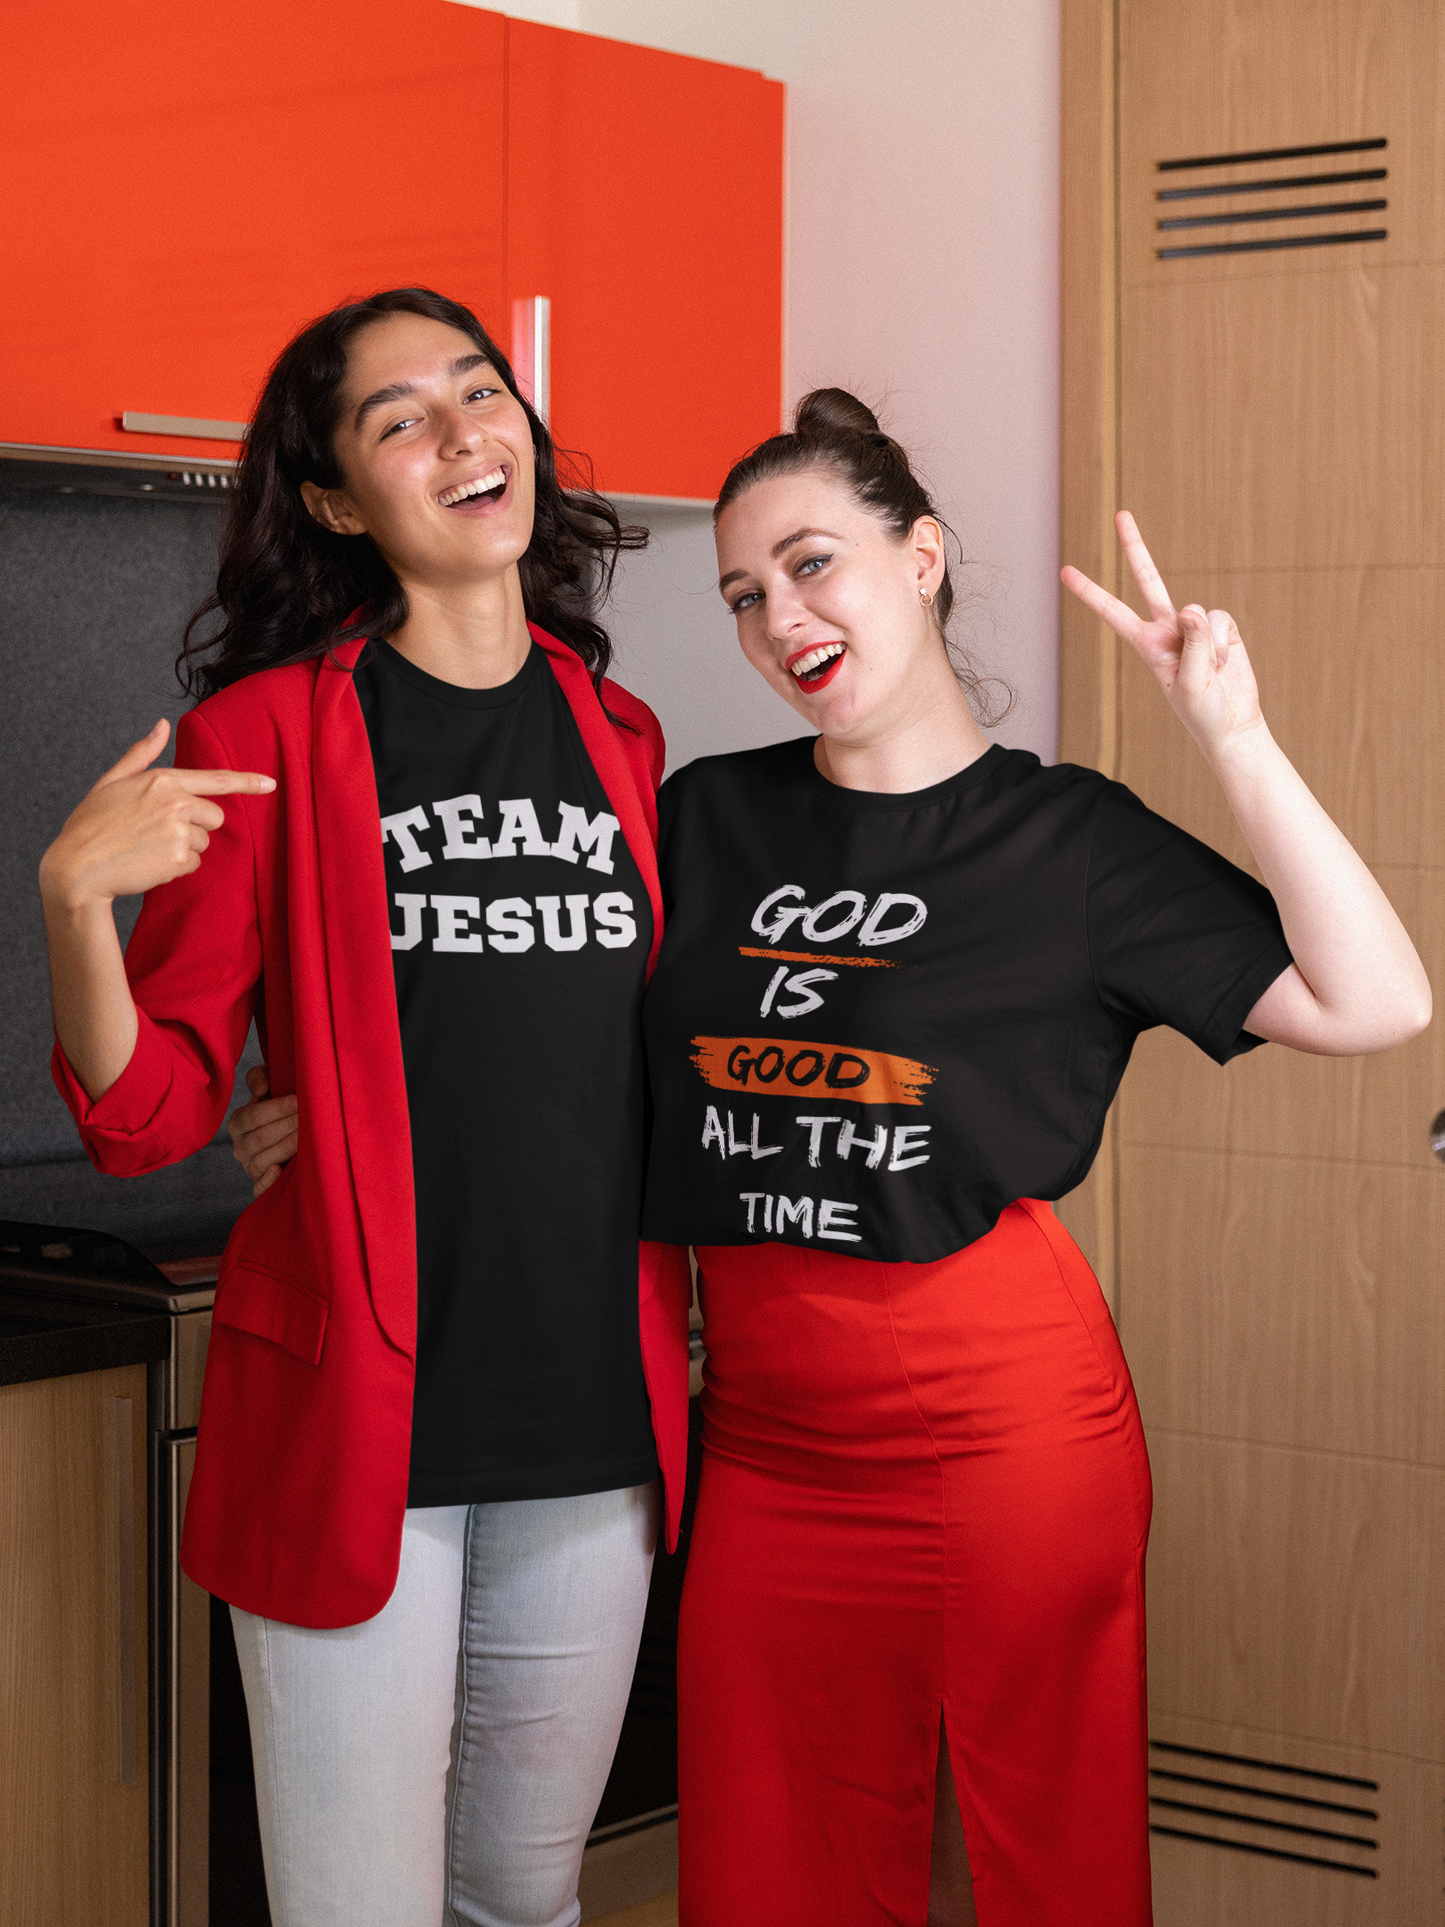 Team Jesus Christian Shirt